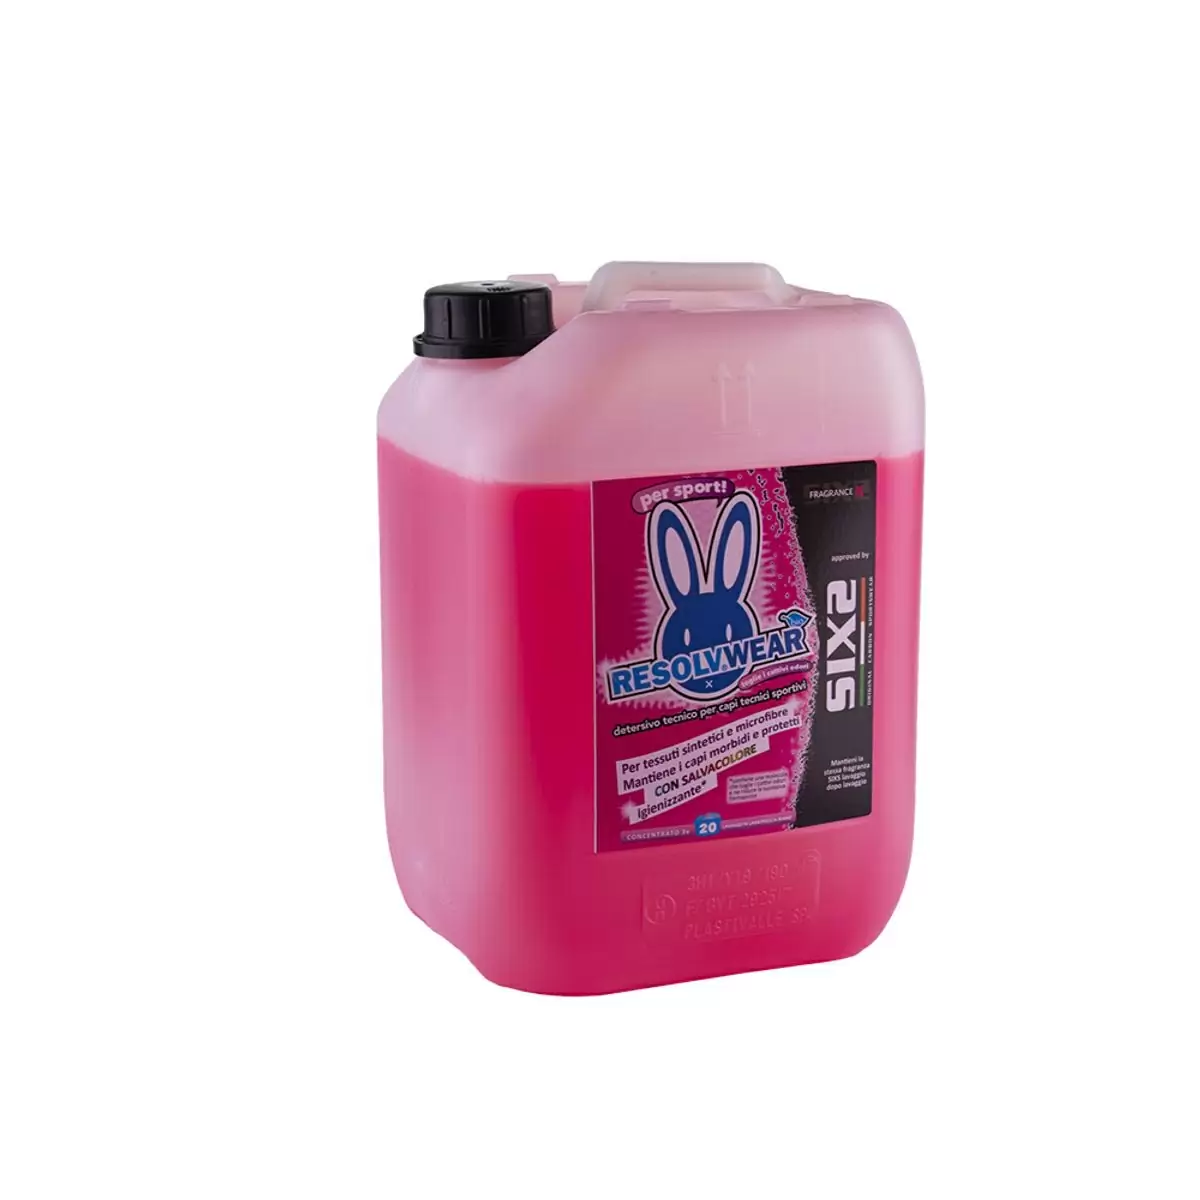 Fragrance X ResolvWear Detergent For Technical Sportswear 10L - image